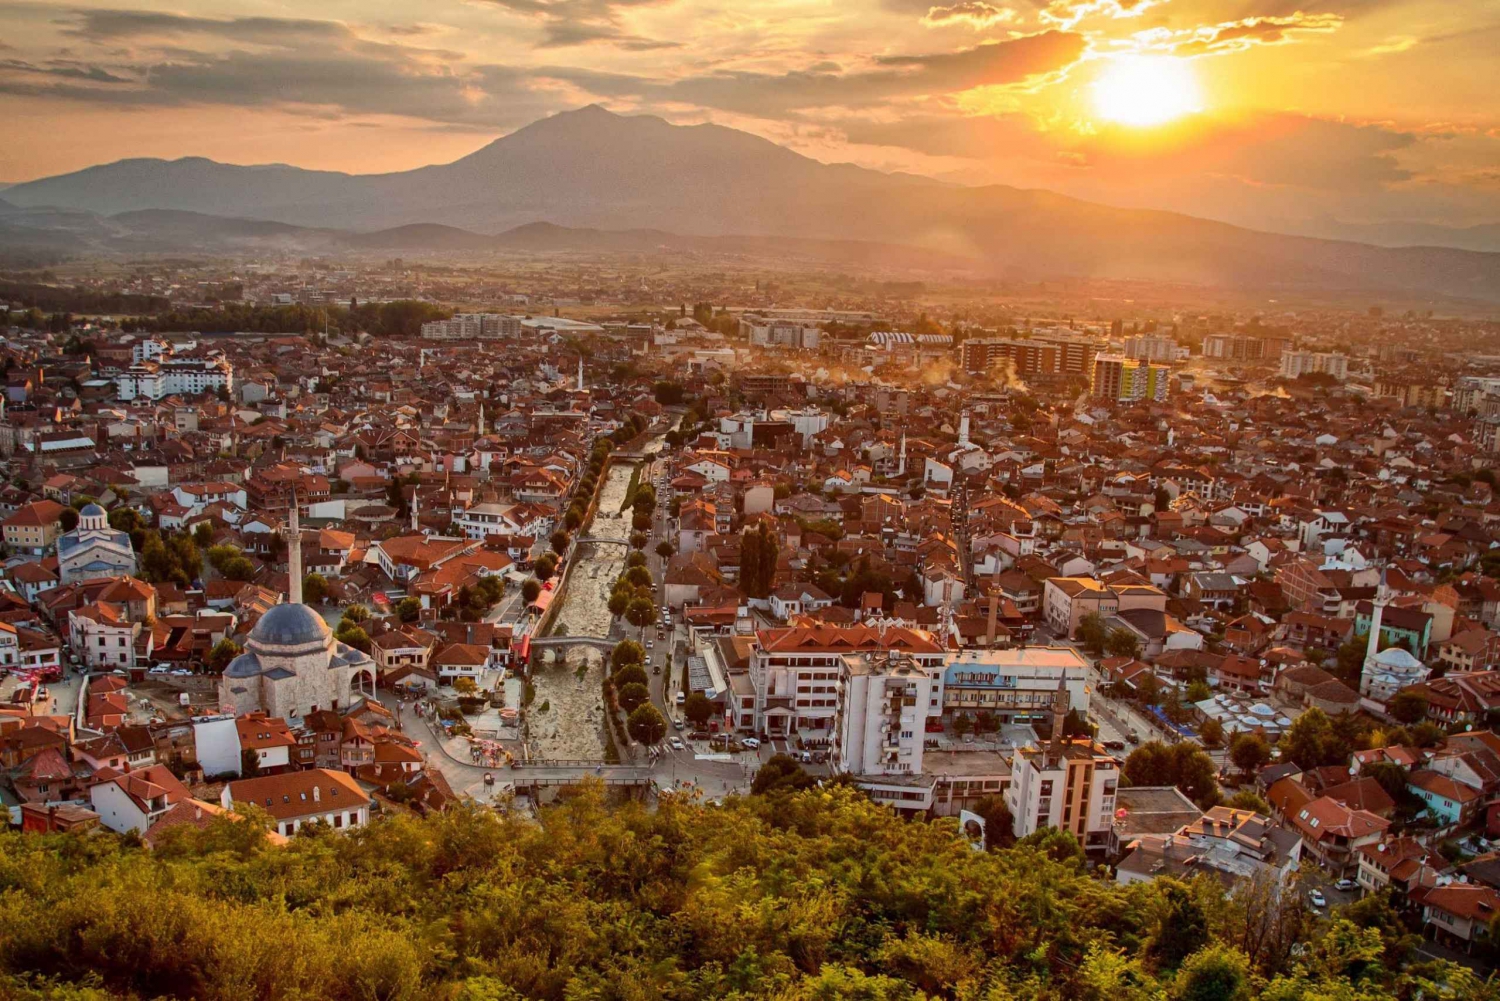 From Tirana: Day Tour to Pristina and Prizren in Kosovo